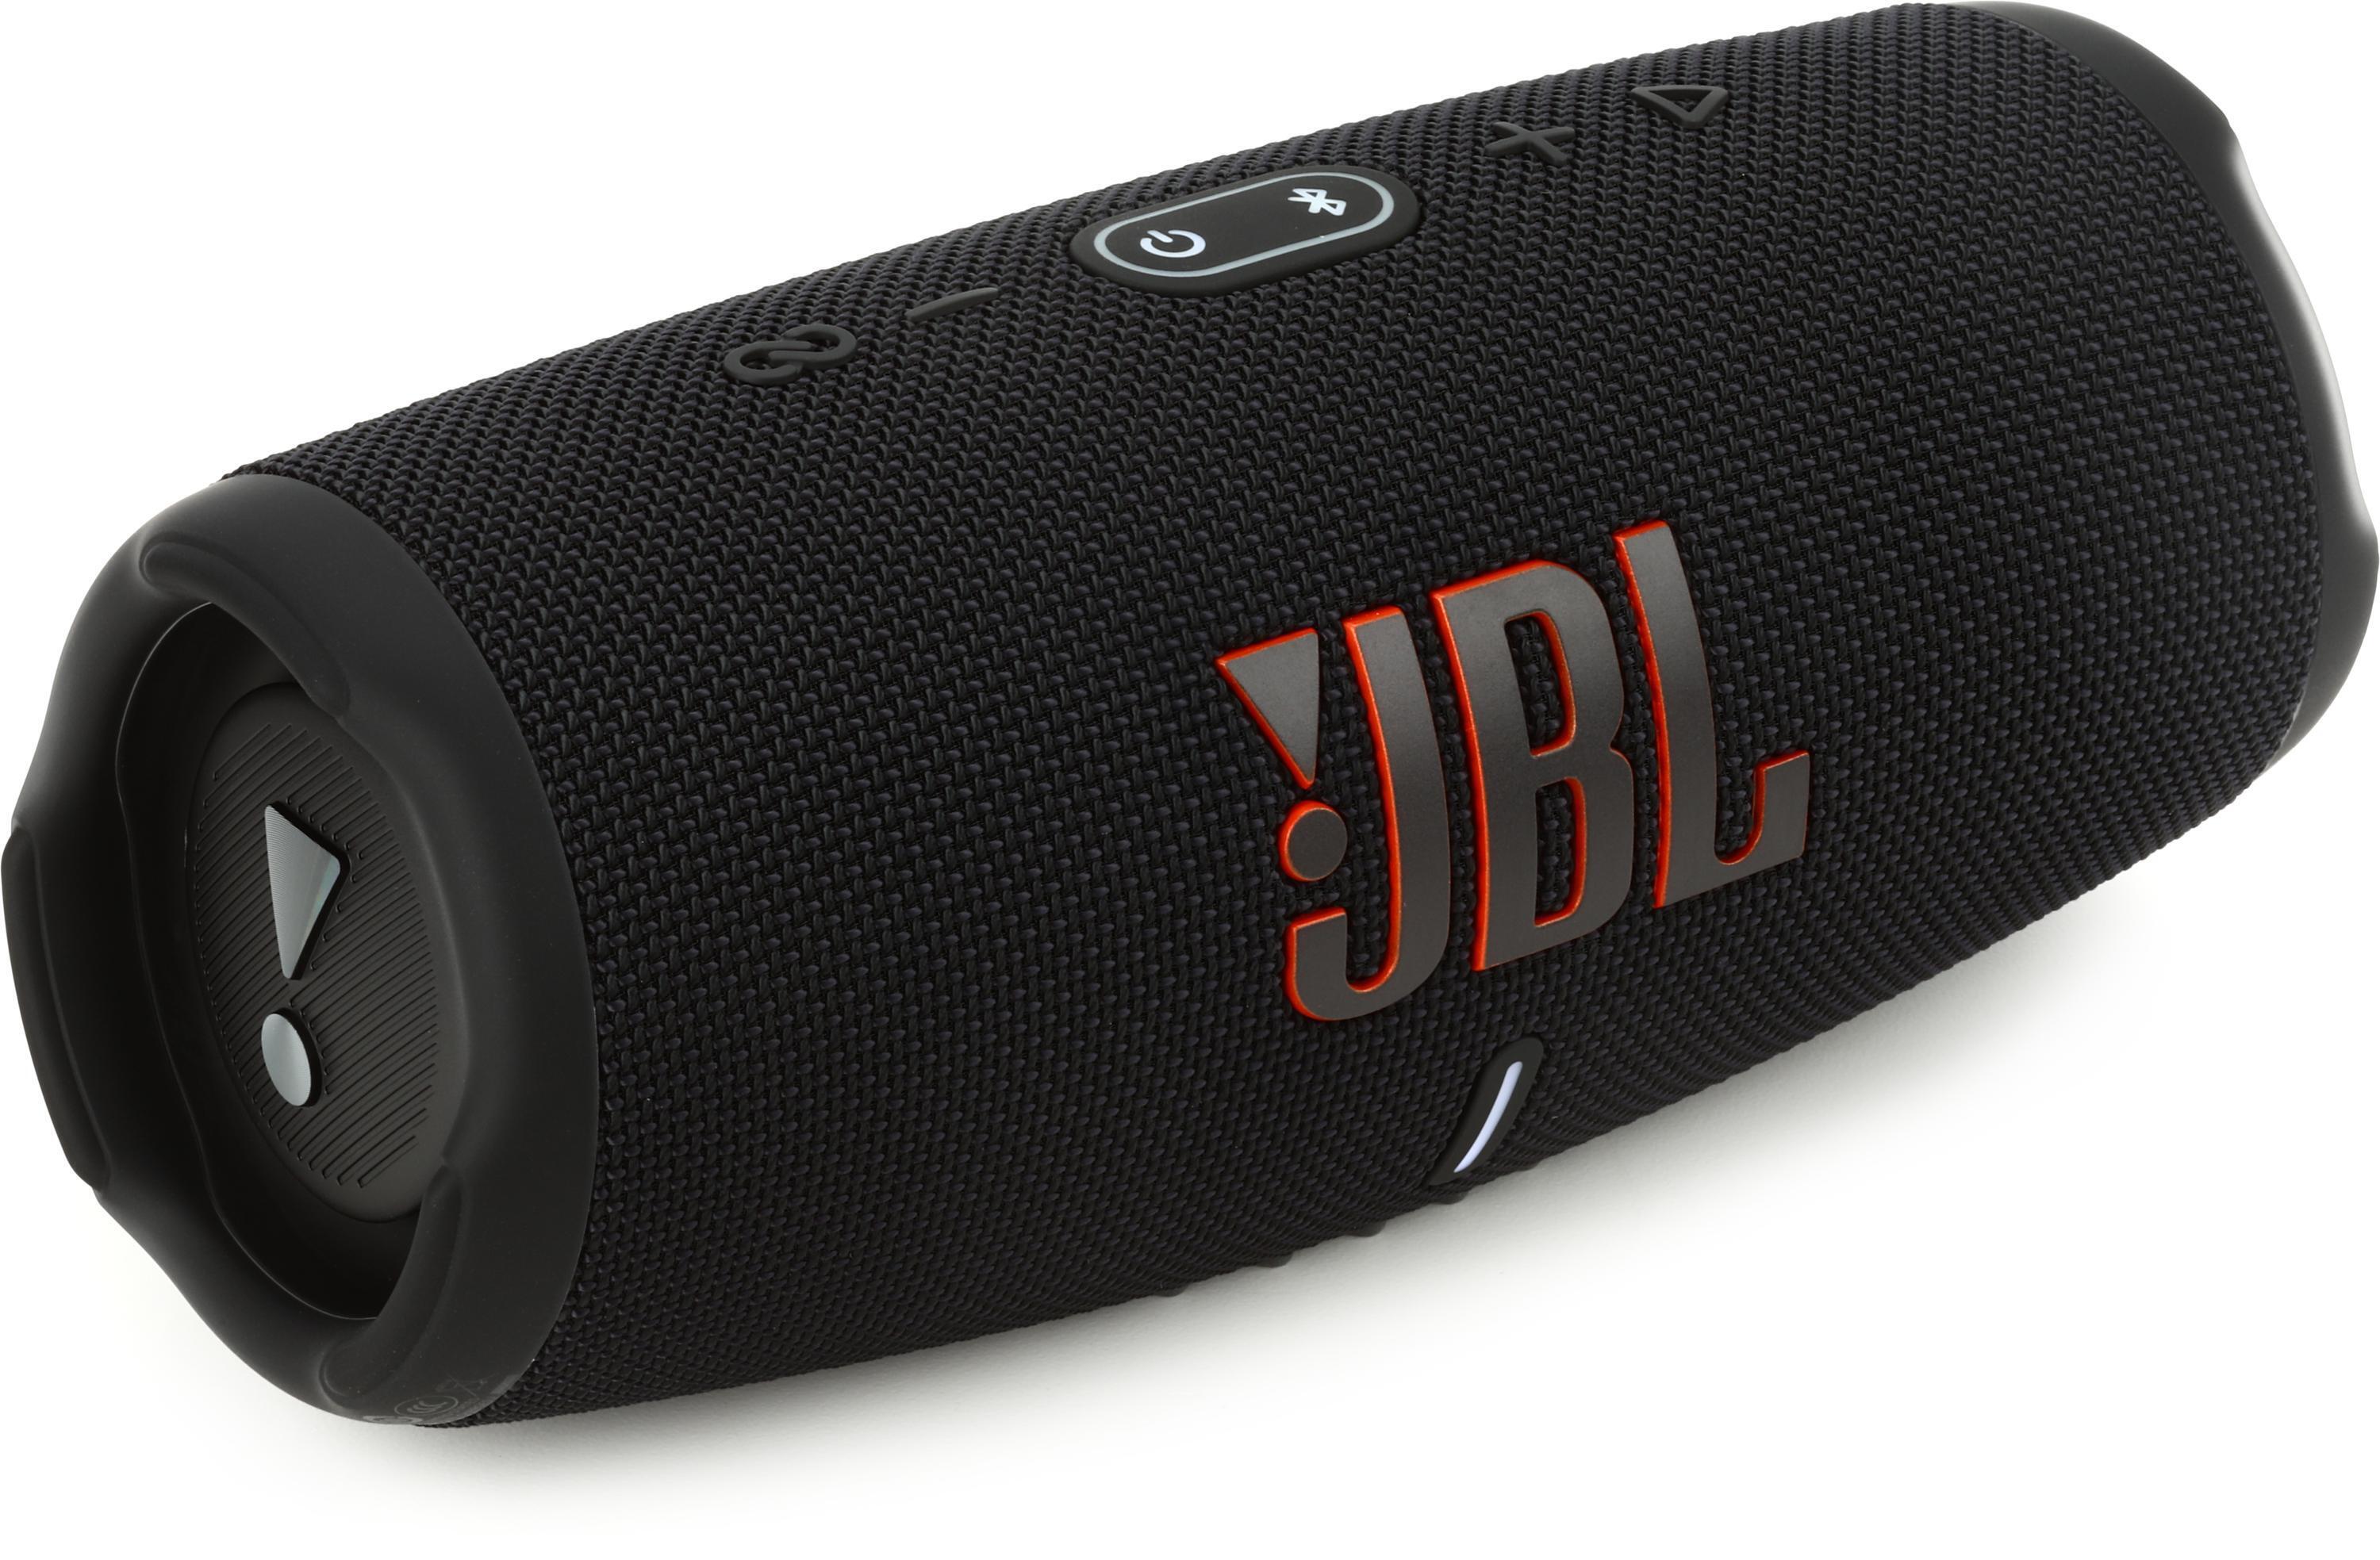  JBL Charge 4 Portable Waterproof Wireless Bluetooth Speaker  Bundle - (Pair) Black : Electronics